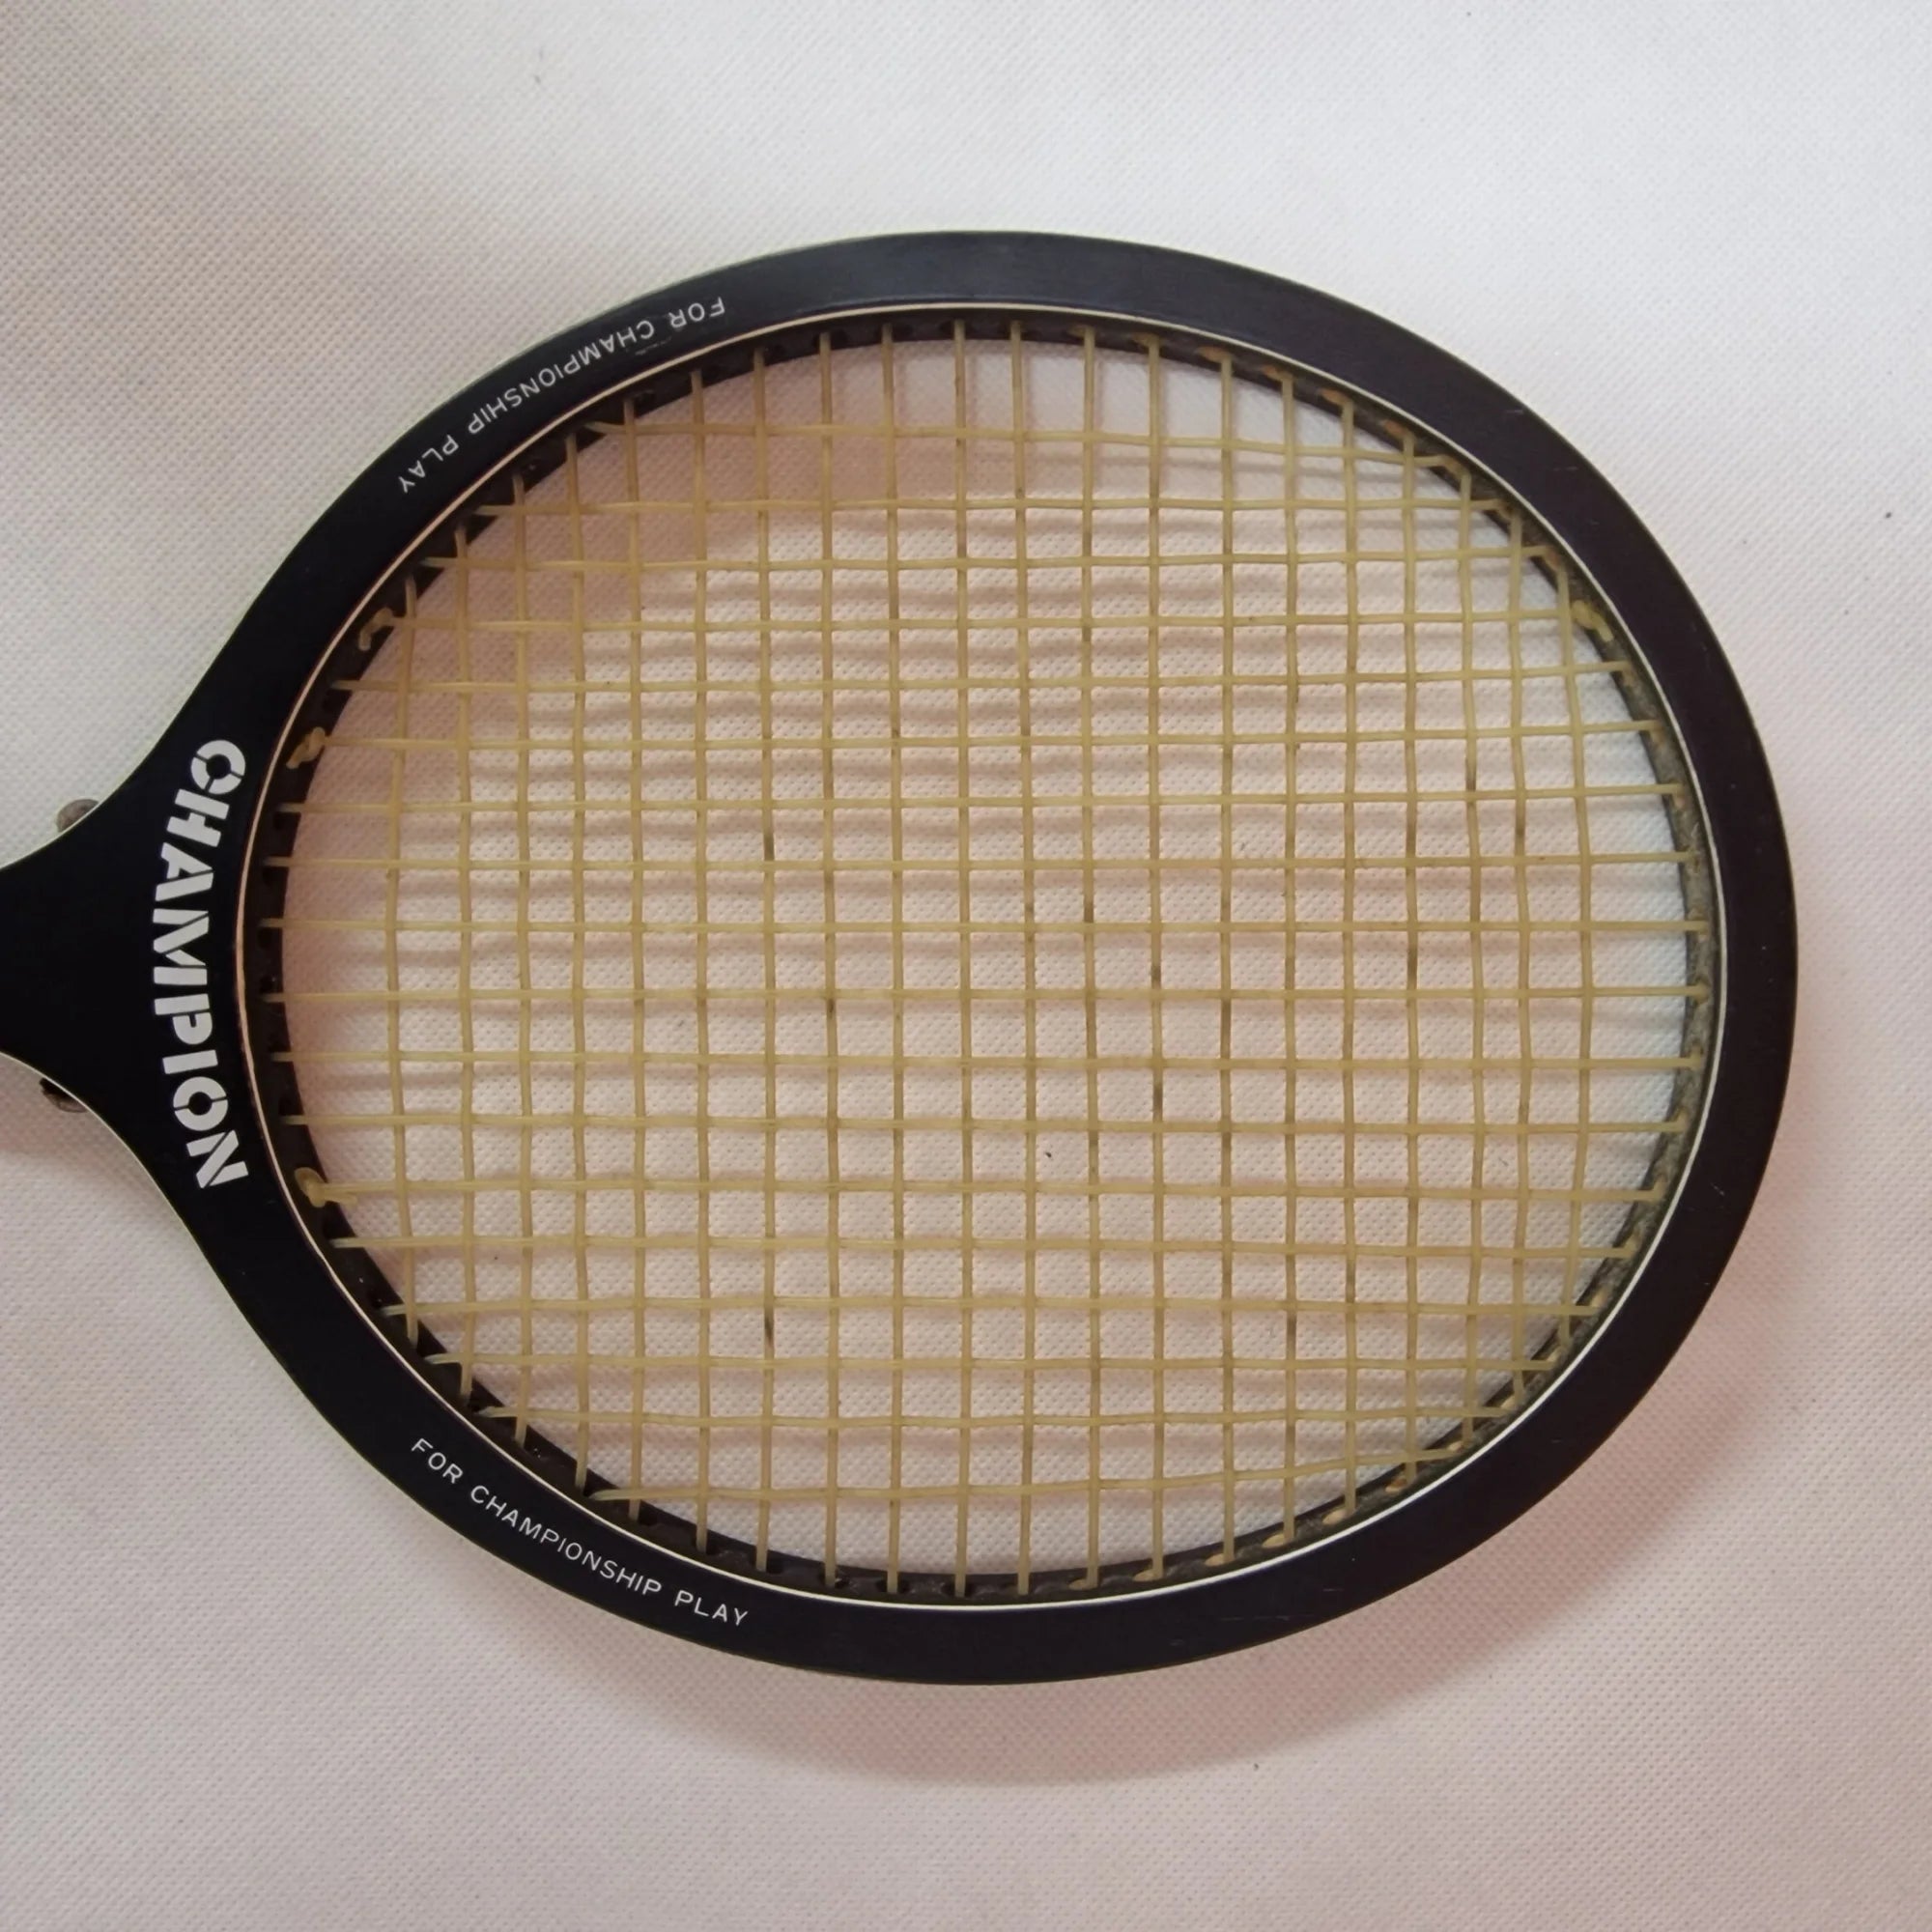 Black Knight Champion Badminton Racket - Preloved - Rackets